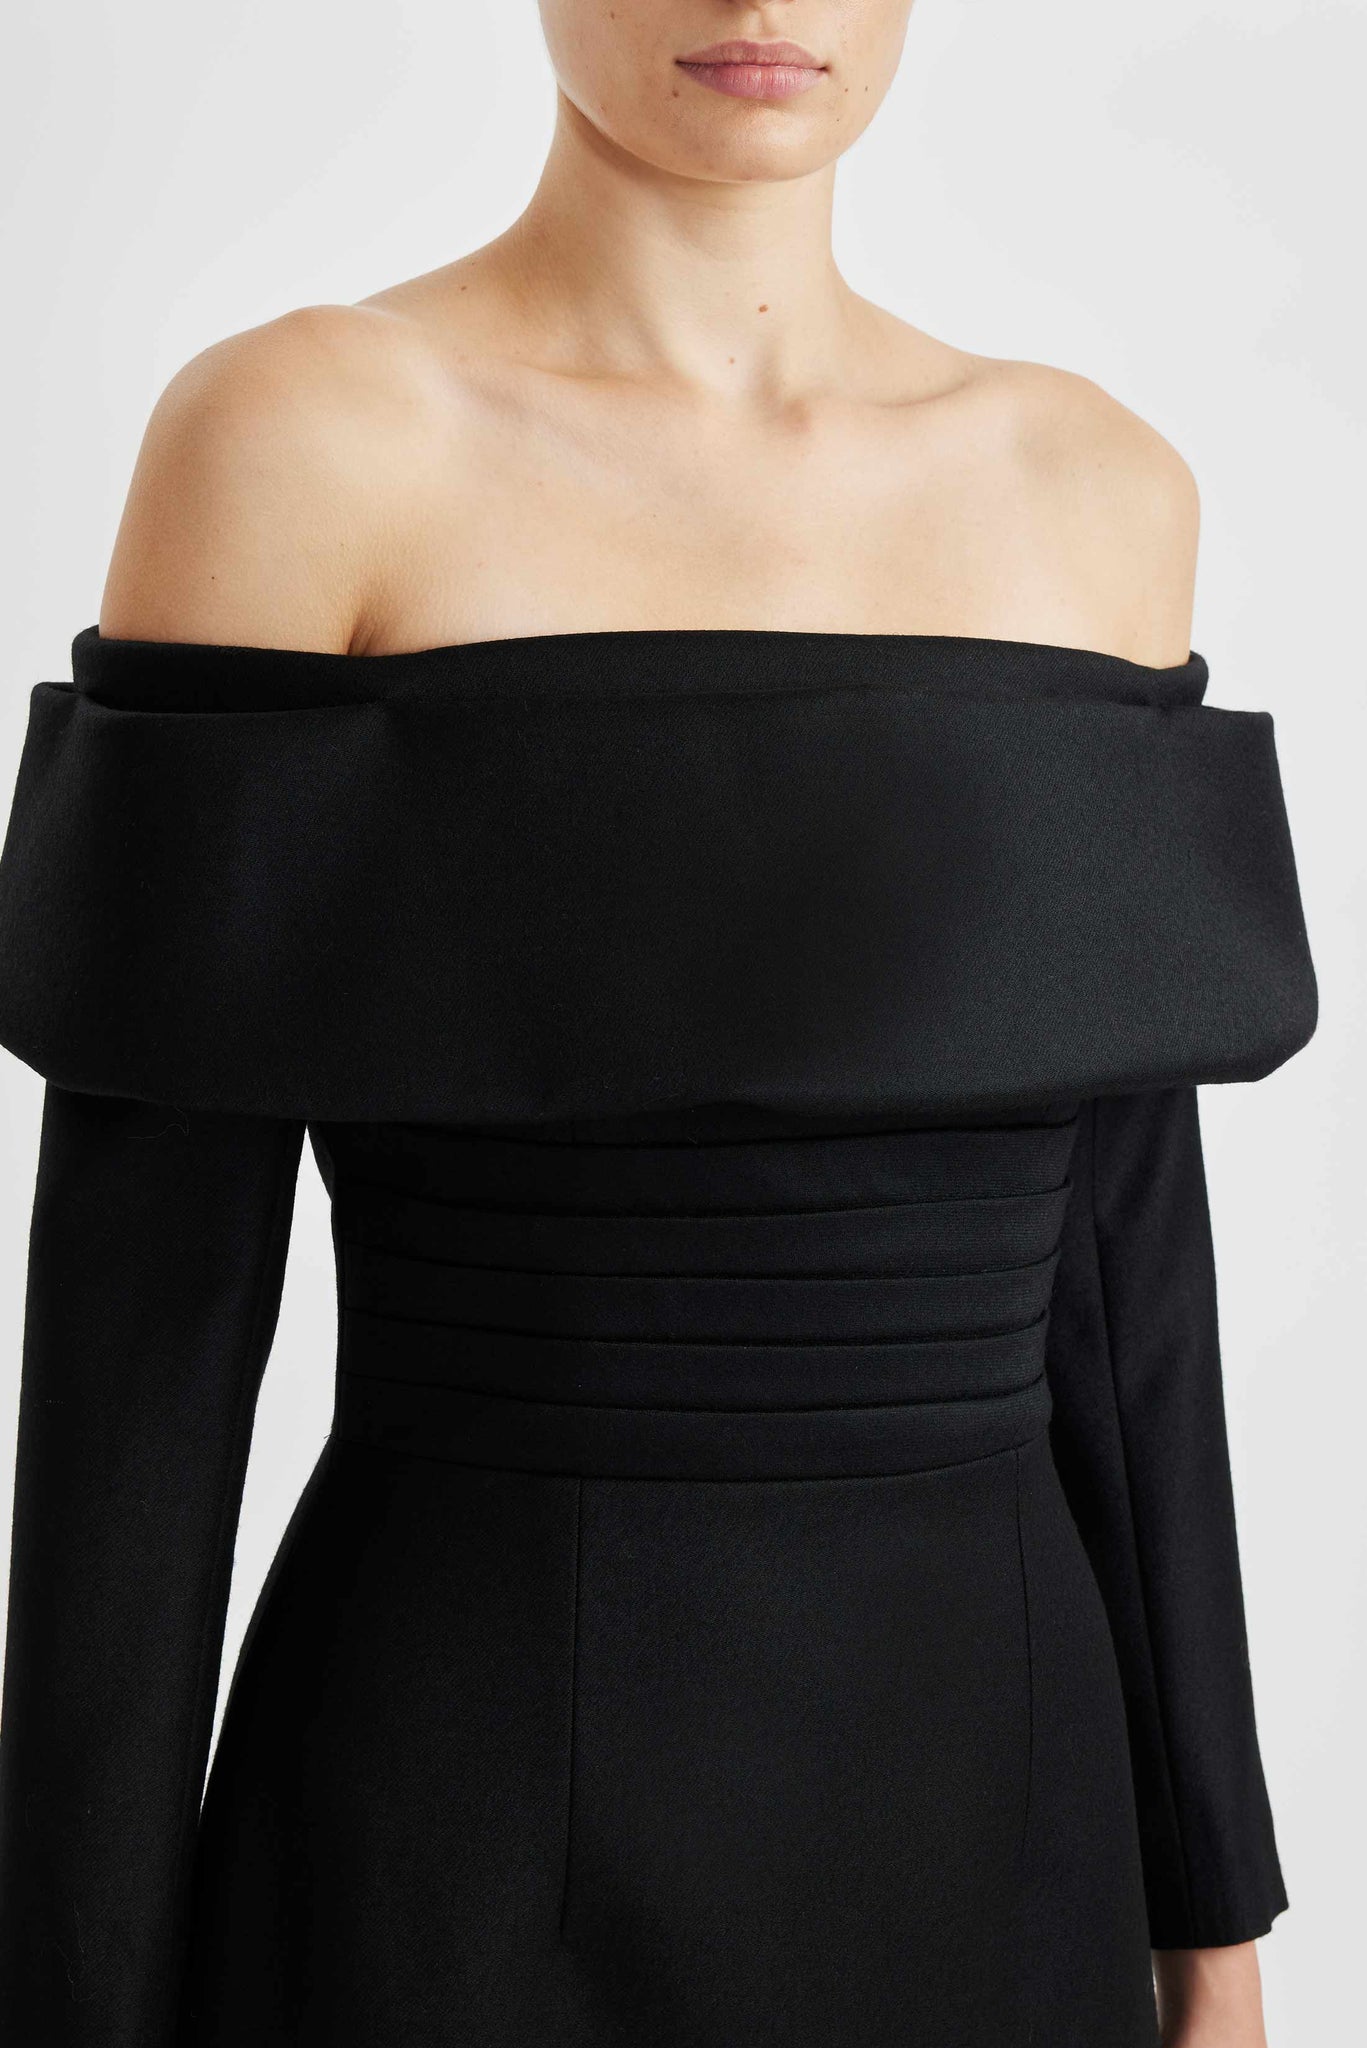 Emilia Wickstead Derika Off-the-Shoulder Dress in Black Flanella